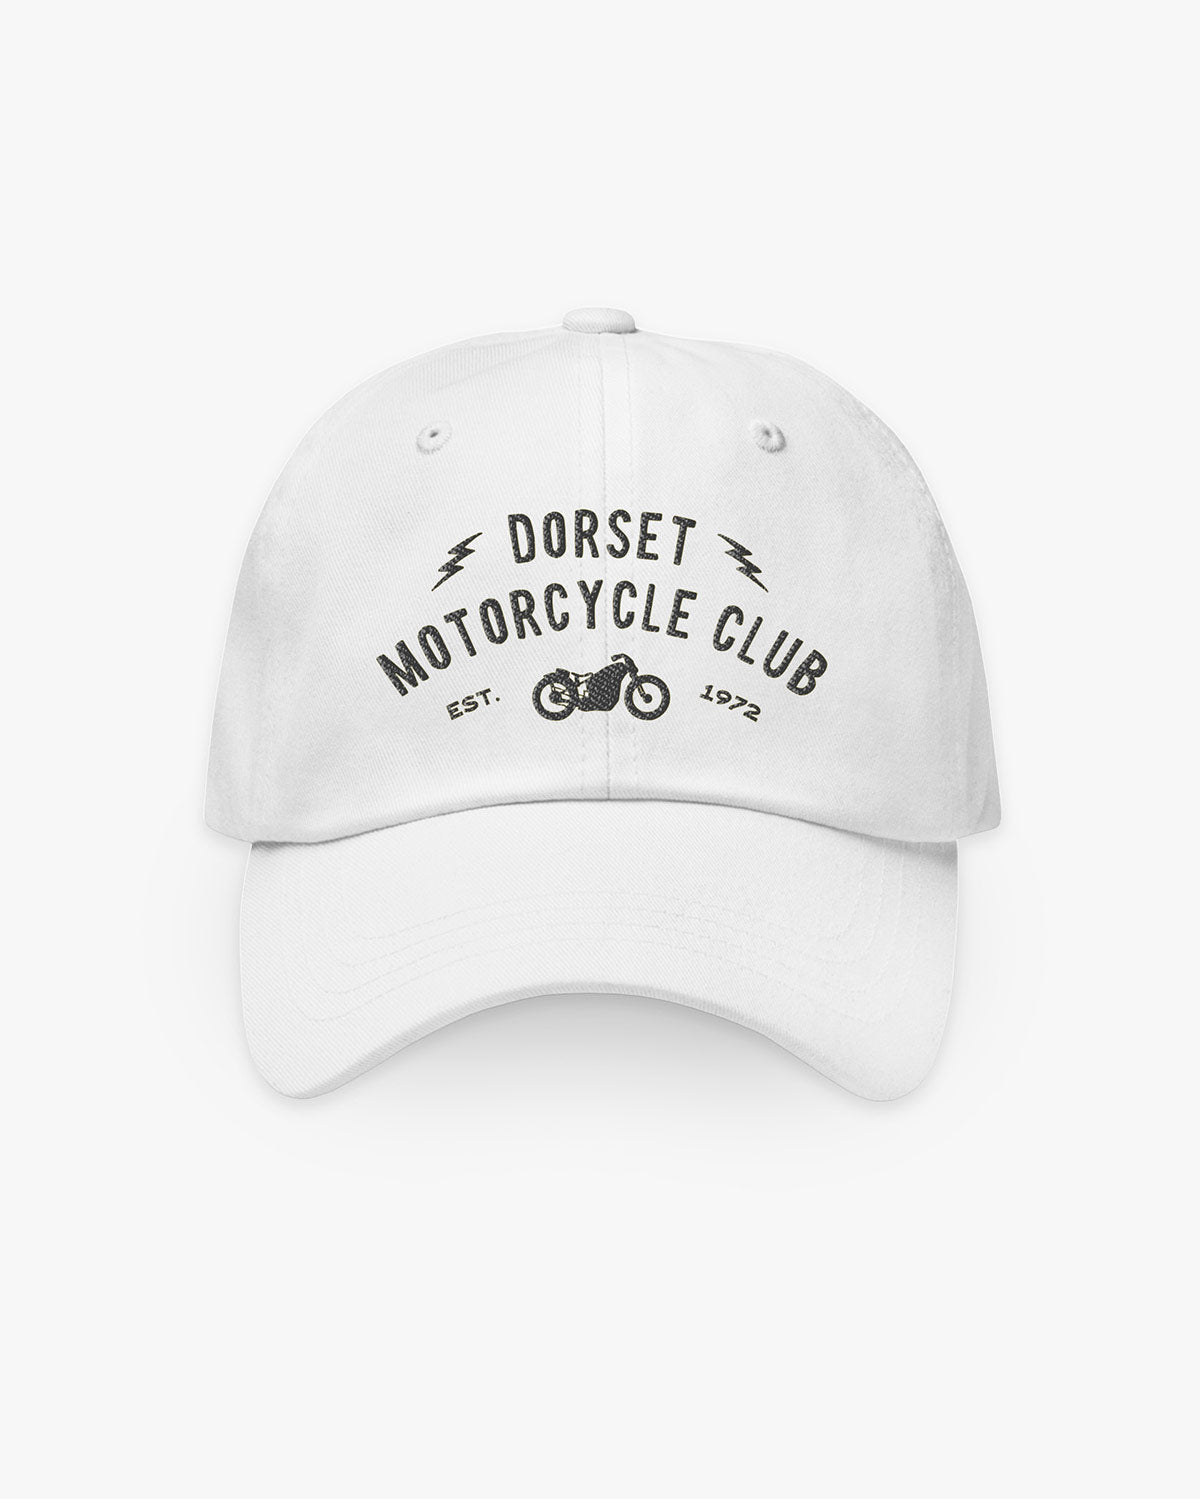 Motorcycle Club - Dorset - Hat